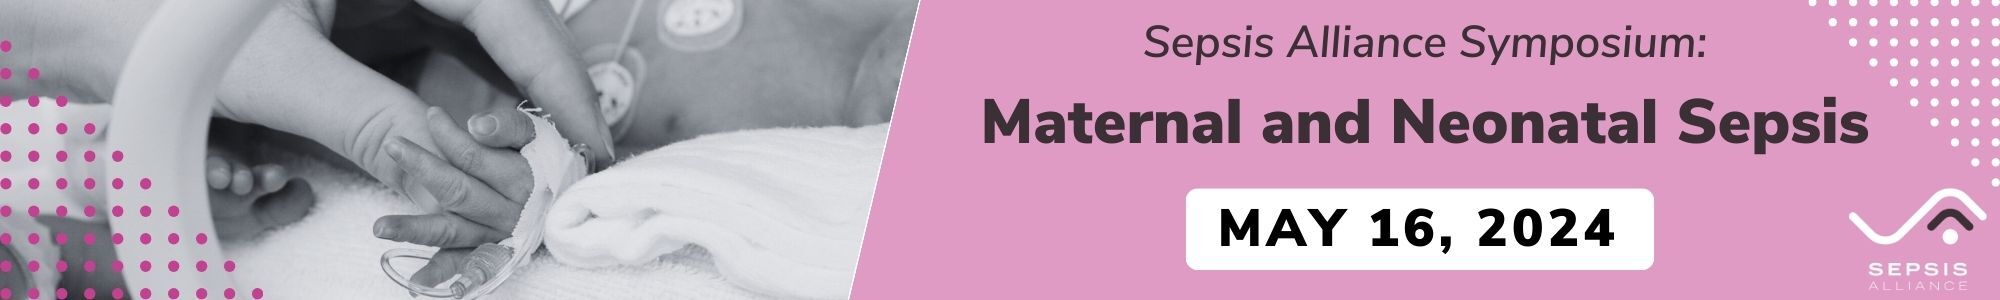 Sepsis Alliance Symposium: Maternal and Neonatal Sepsis